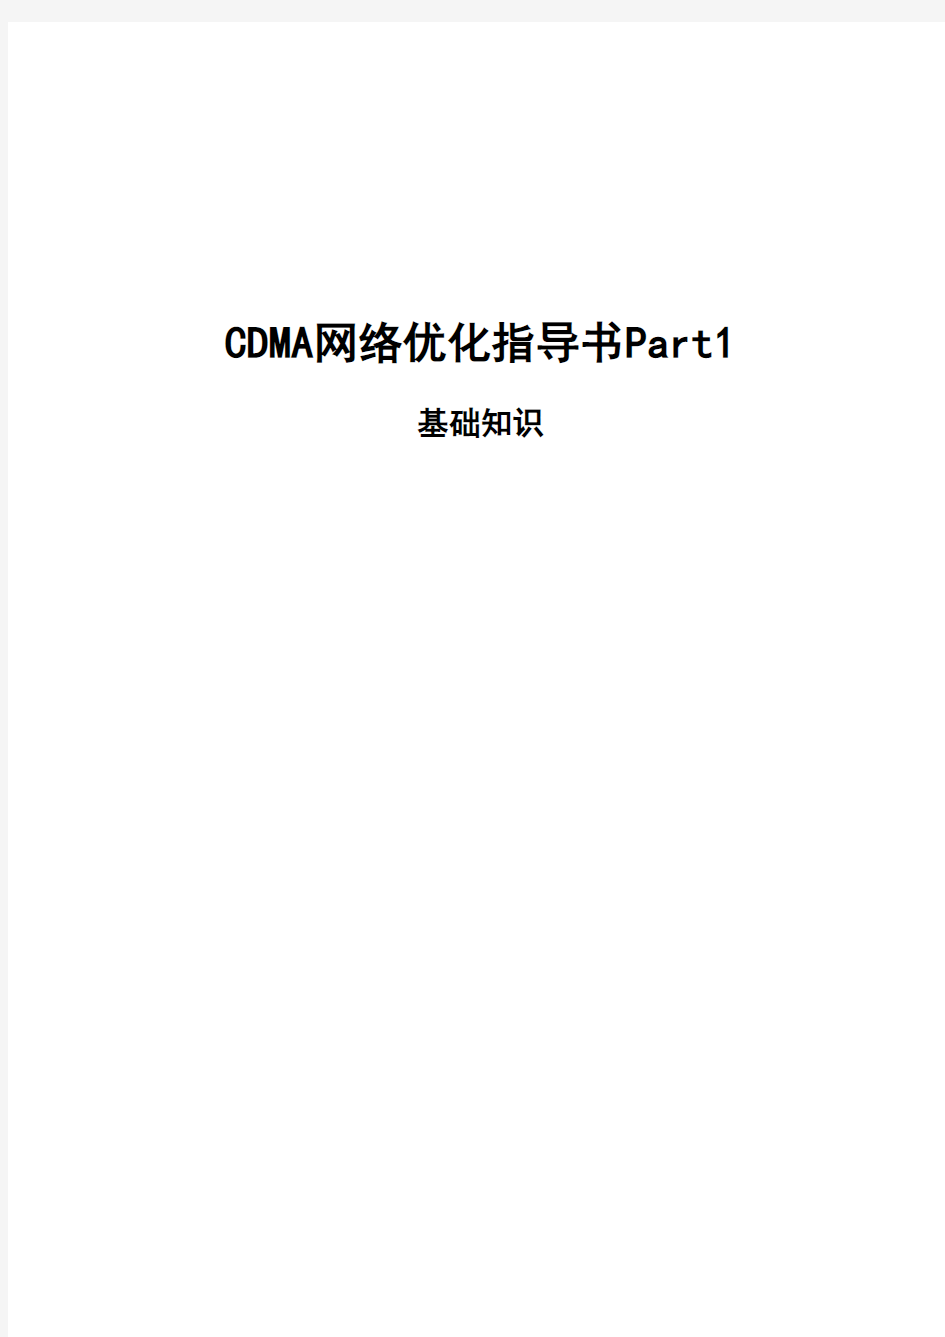 CDMA网络优化指导书v0.1_Part1CDMA网络基础知识